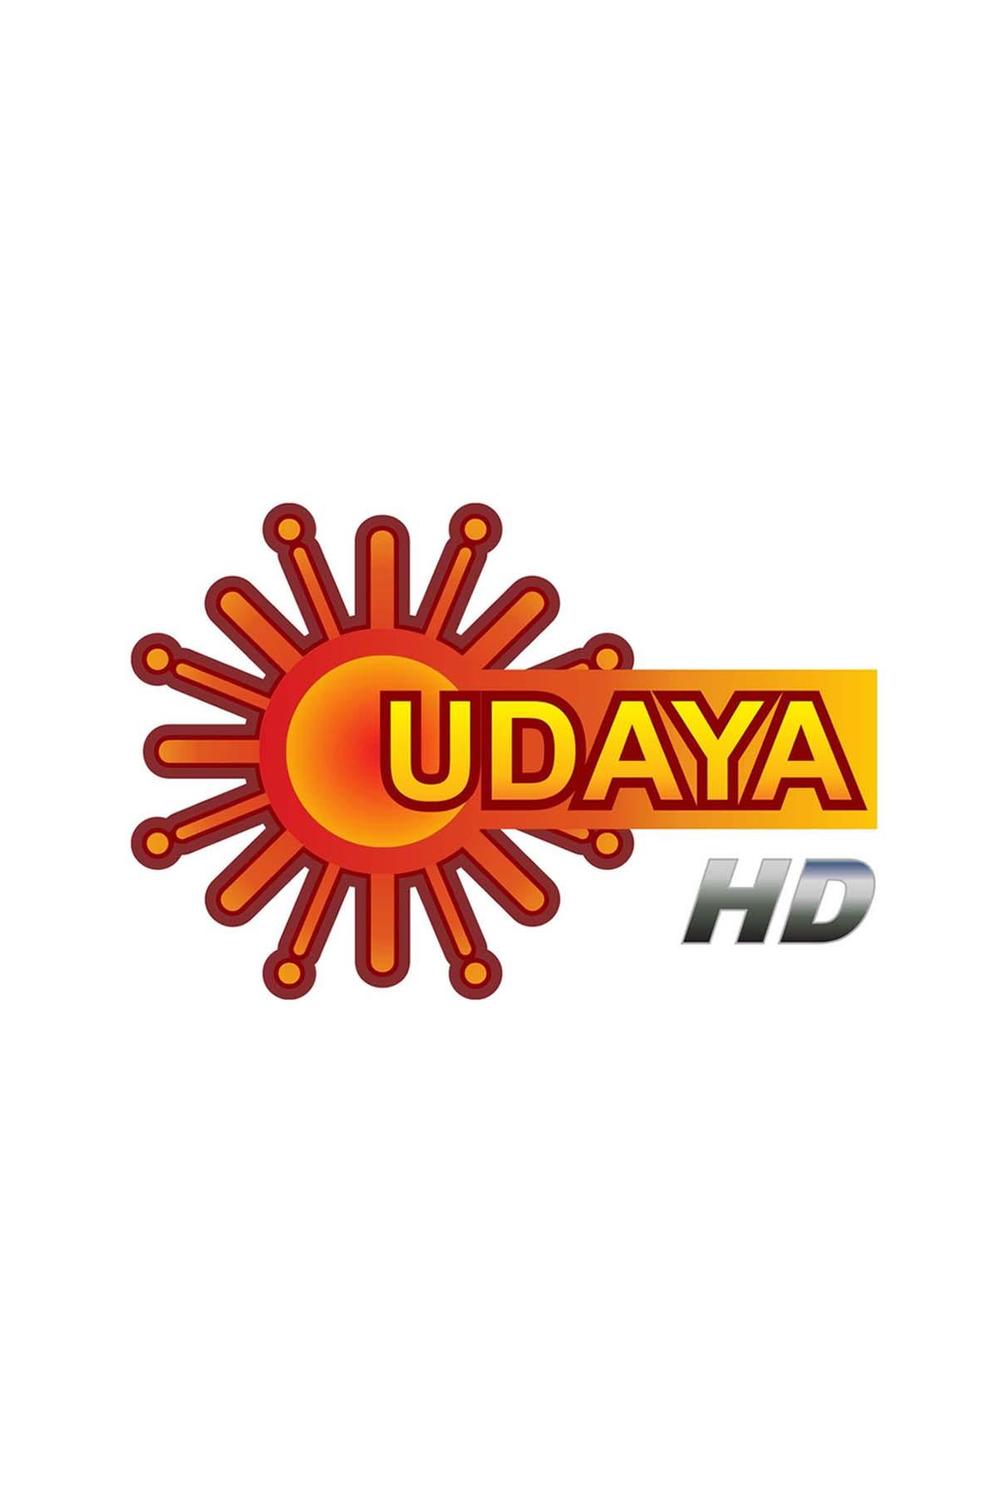 udaya tv live kannada